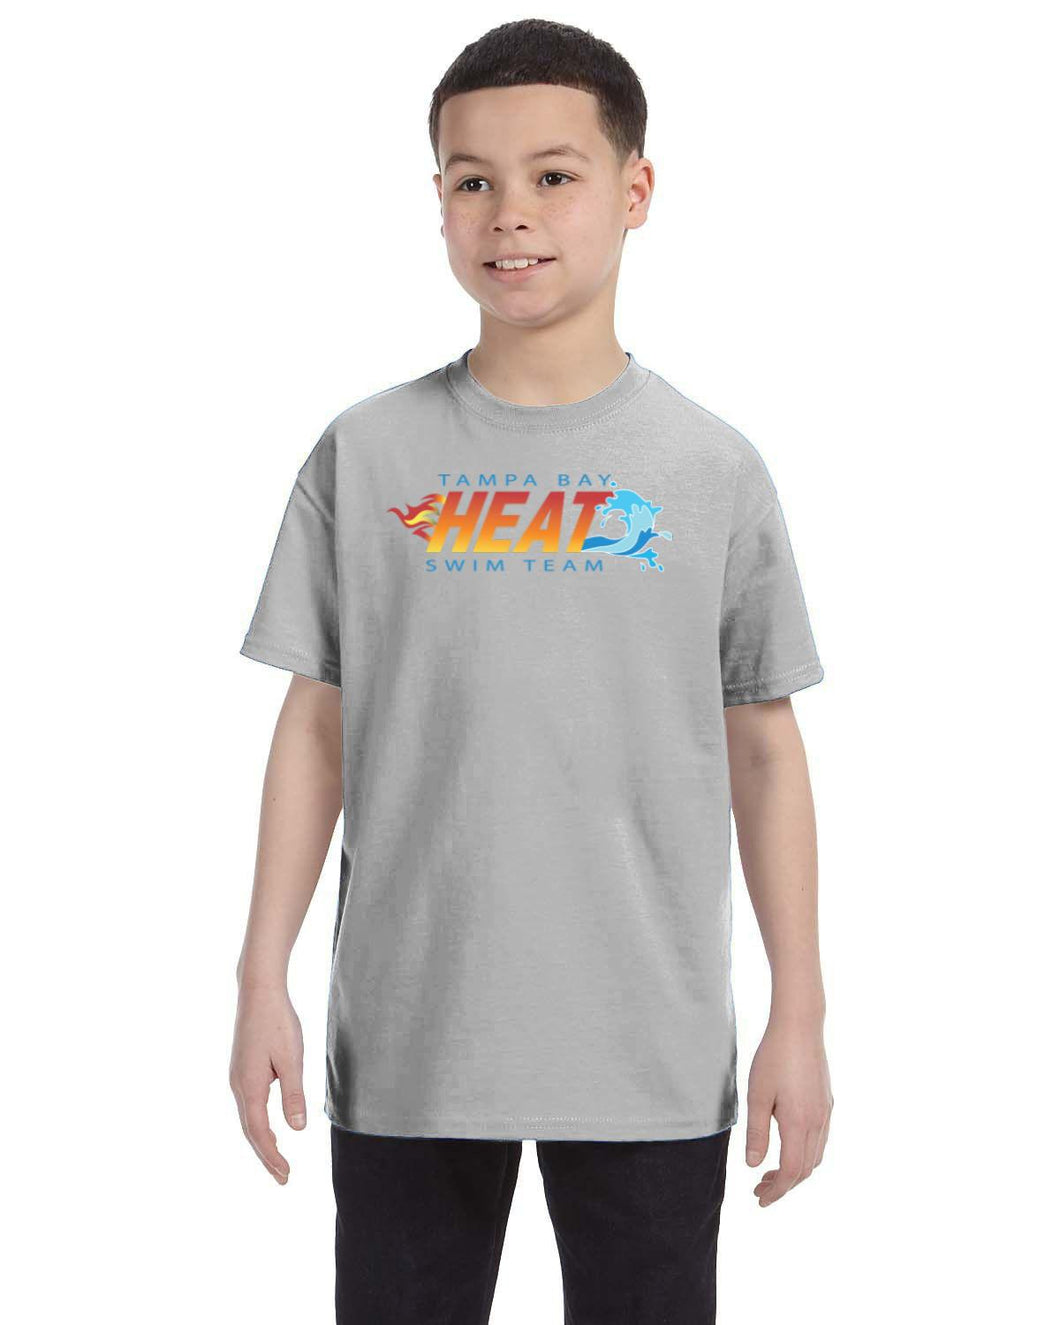 Tampa Bay Heat Swim Team - Youth Sizes